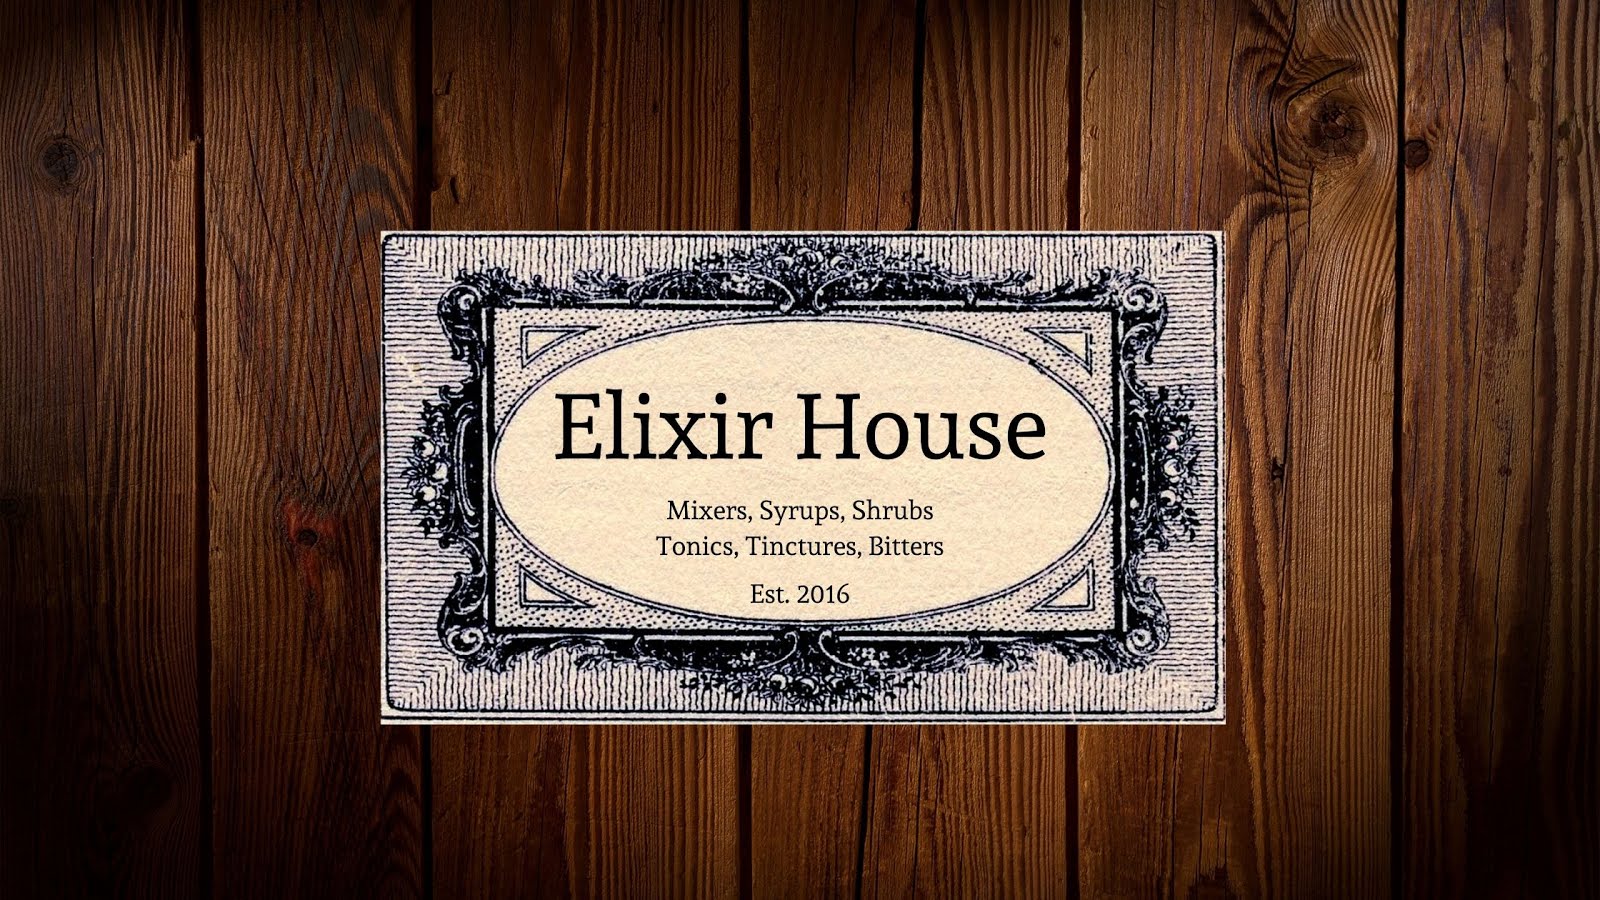 The Elixir House